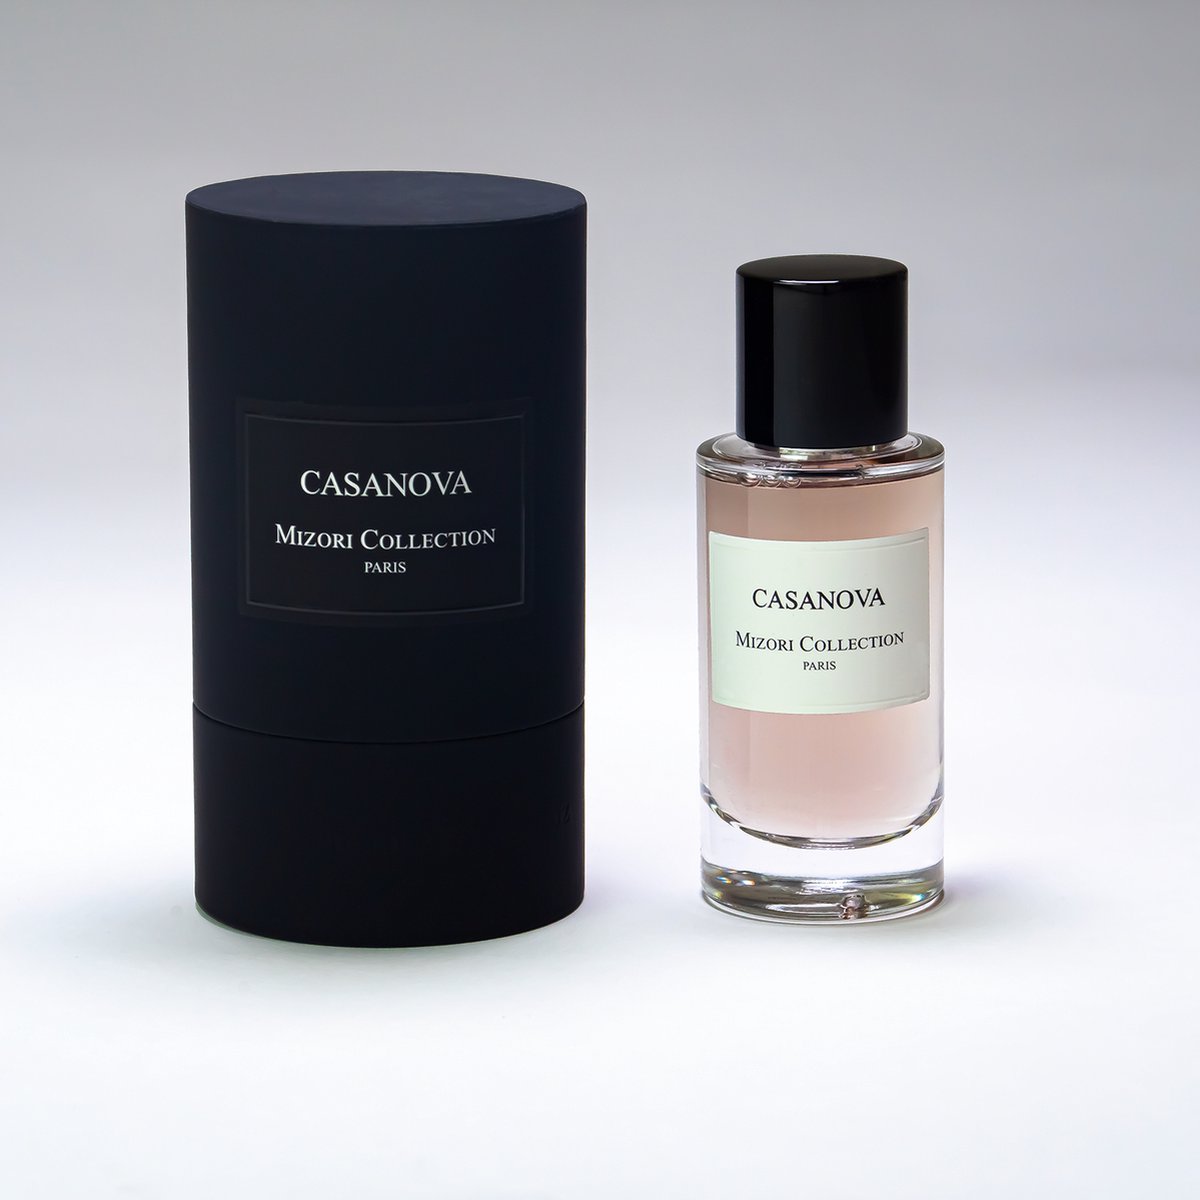 Casanova - Mizori Collection Paris - High Exclusive Perfume - Eau de Parfum - 50 ml - Niche Perfume